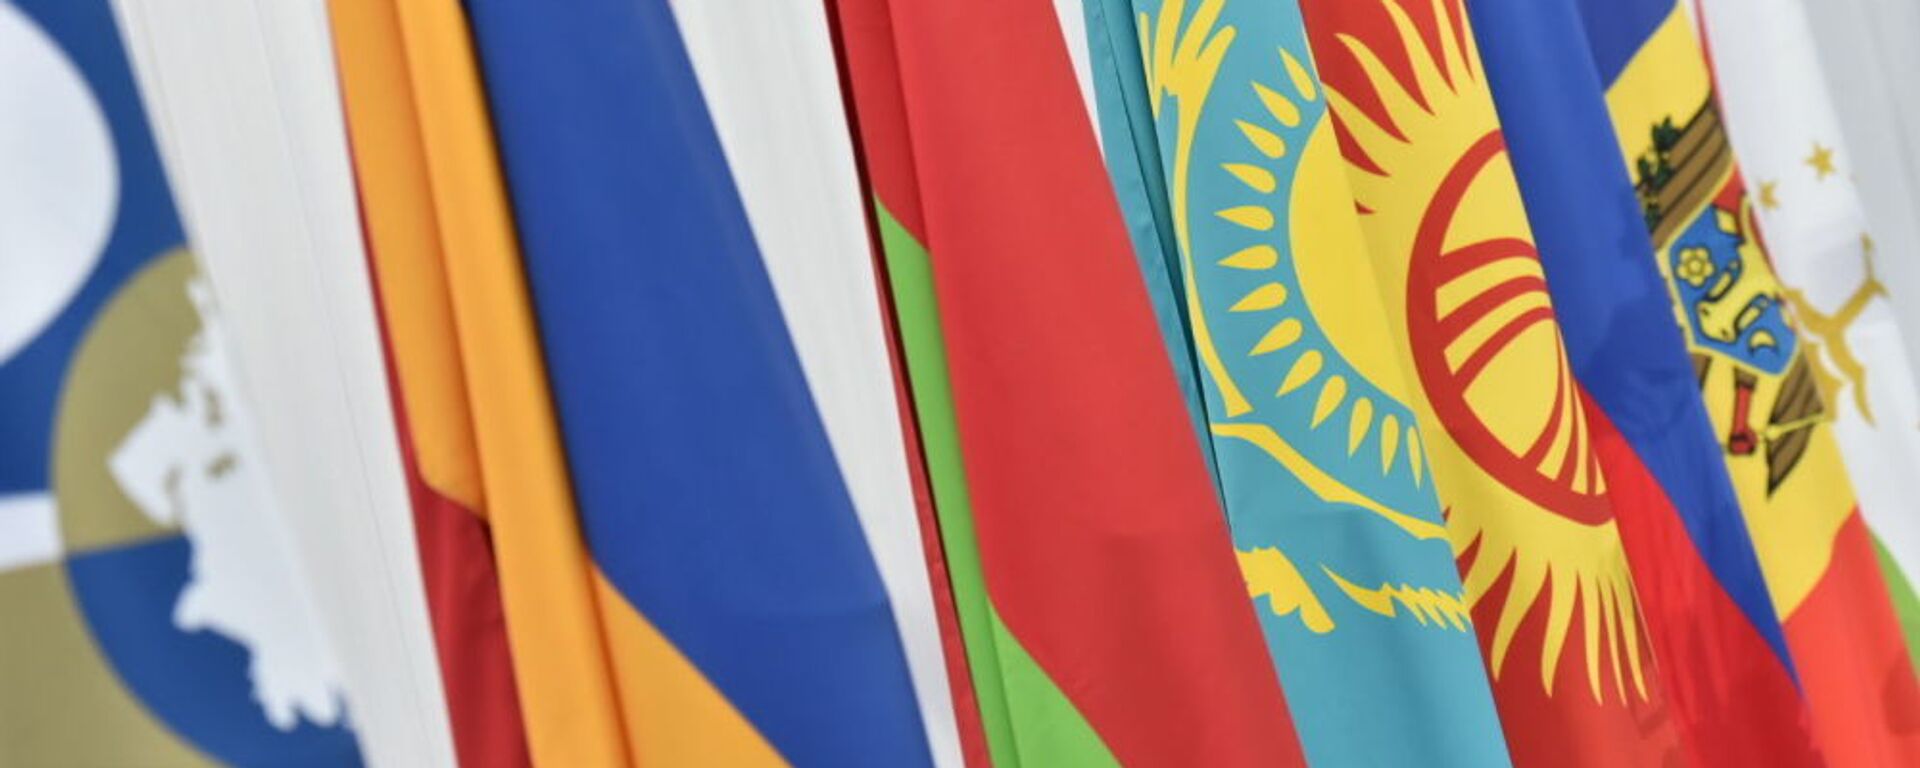 Флаги стран-участниц ЕАЭС - Sputnik Узбекистан, 1920, 29.12.2020